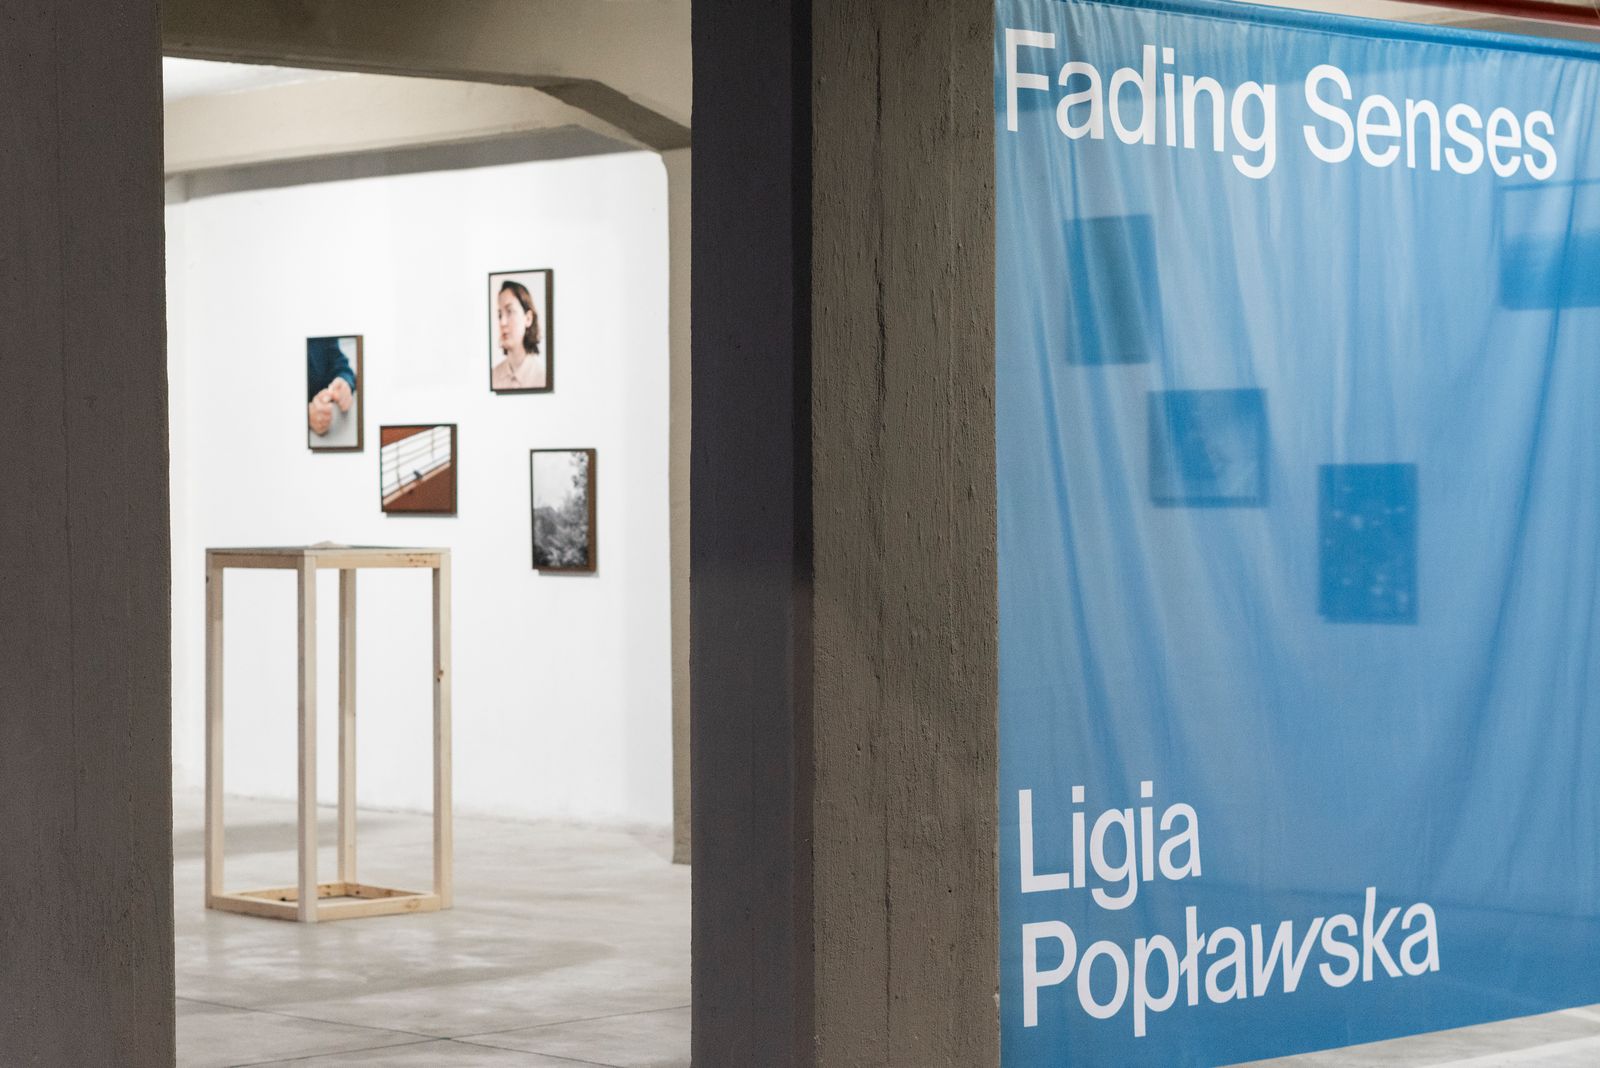 Ligia Popławska On Exhibiting at the PhMuseum Days